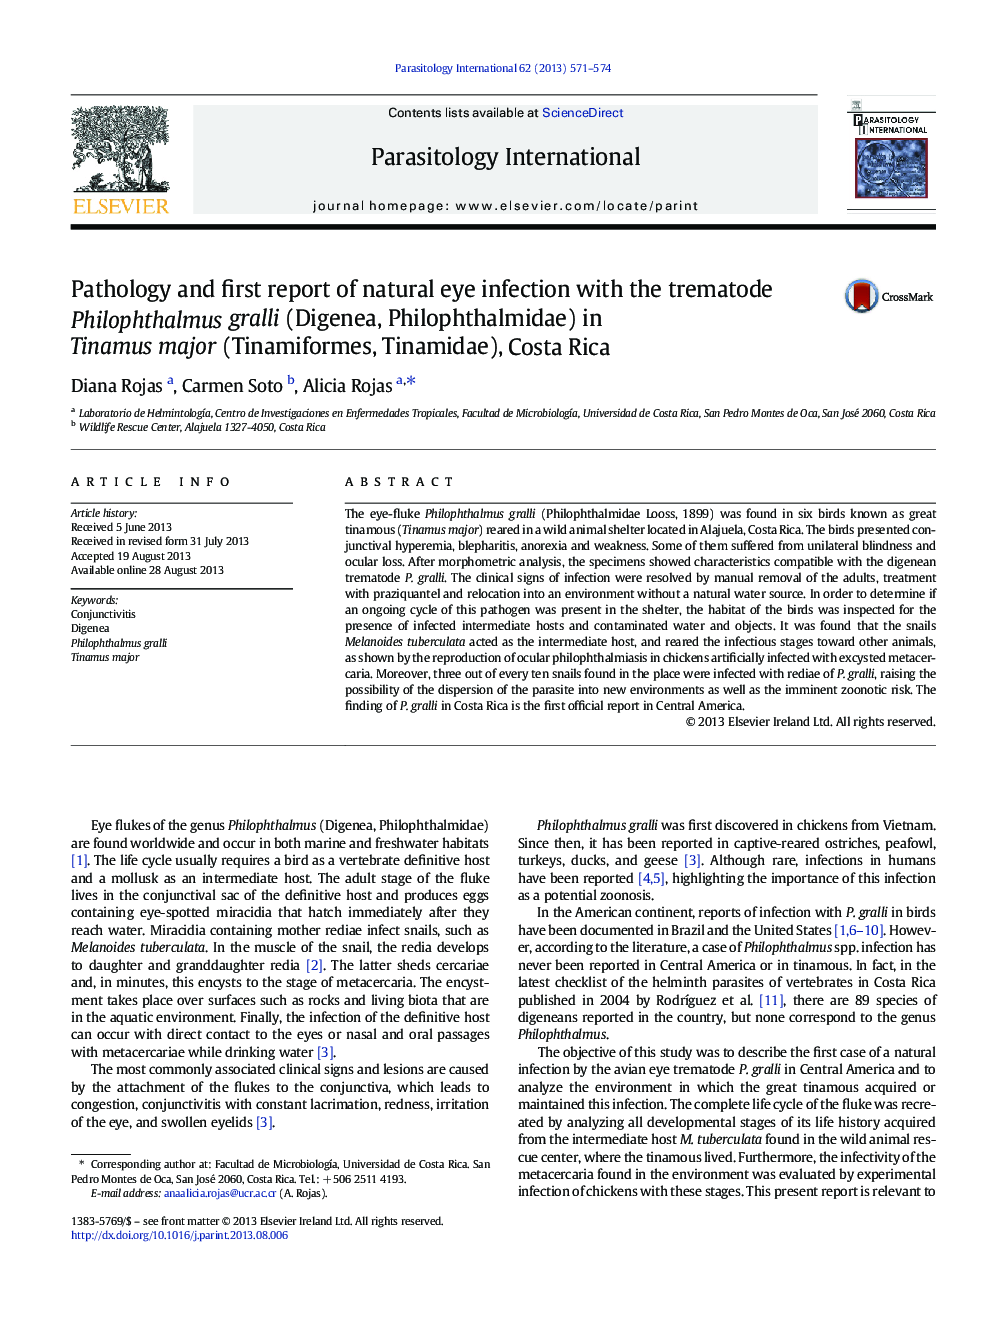 Pathology and first report of natural eye infection with the trematode Philophthalmus gralli (Digenea, Philophthalmidae) in Tinamus major (Tinamiformes, Tinamidae), Costa Rica